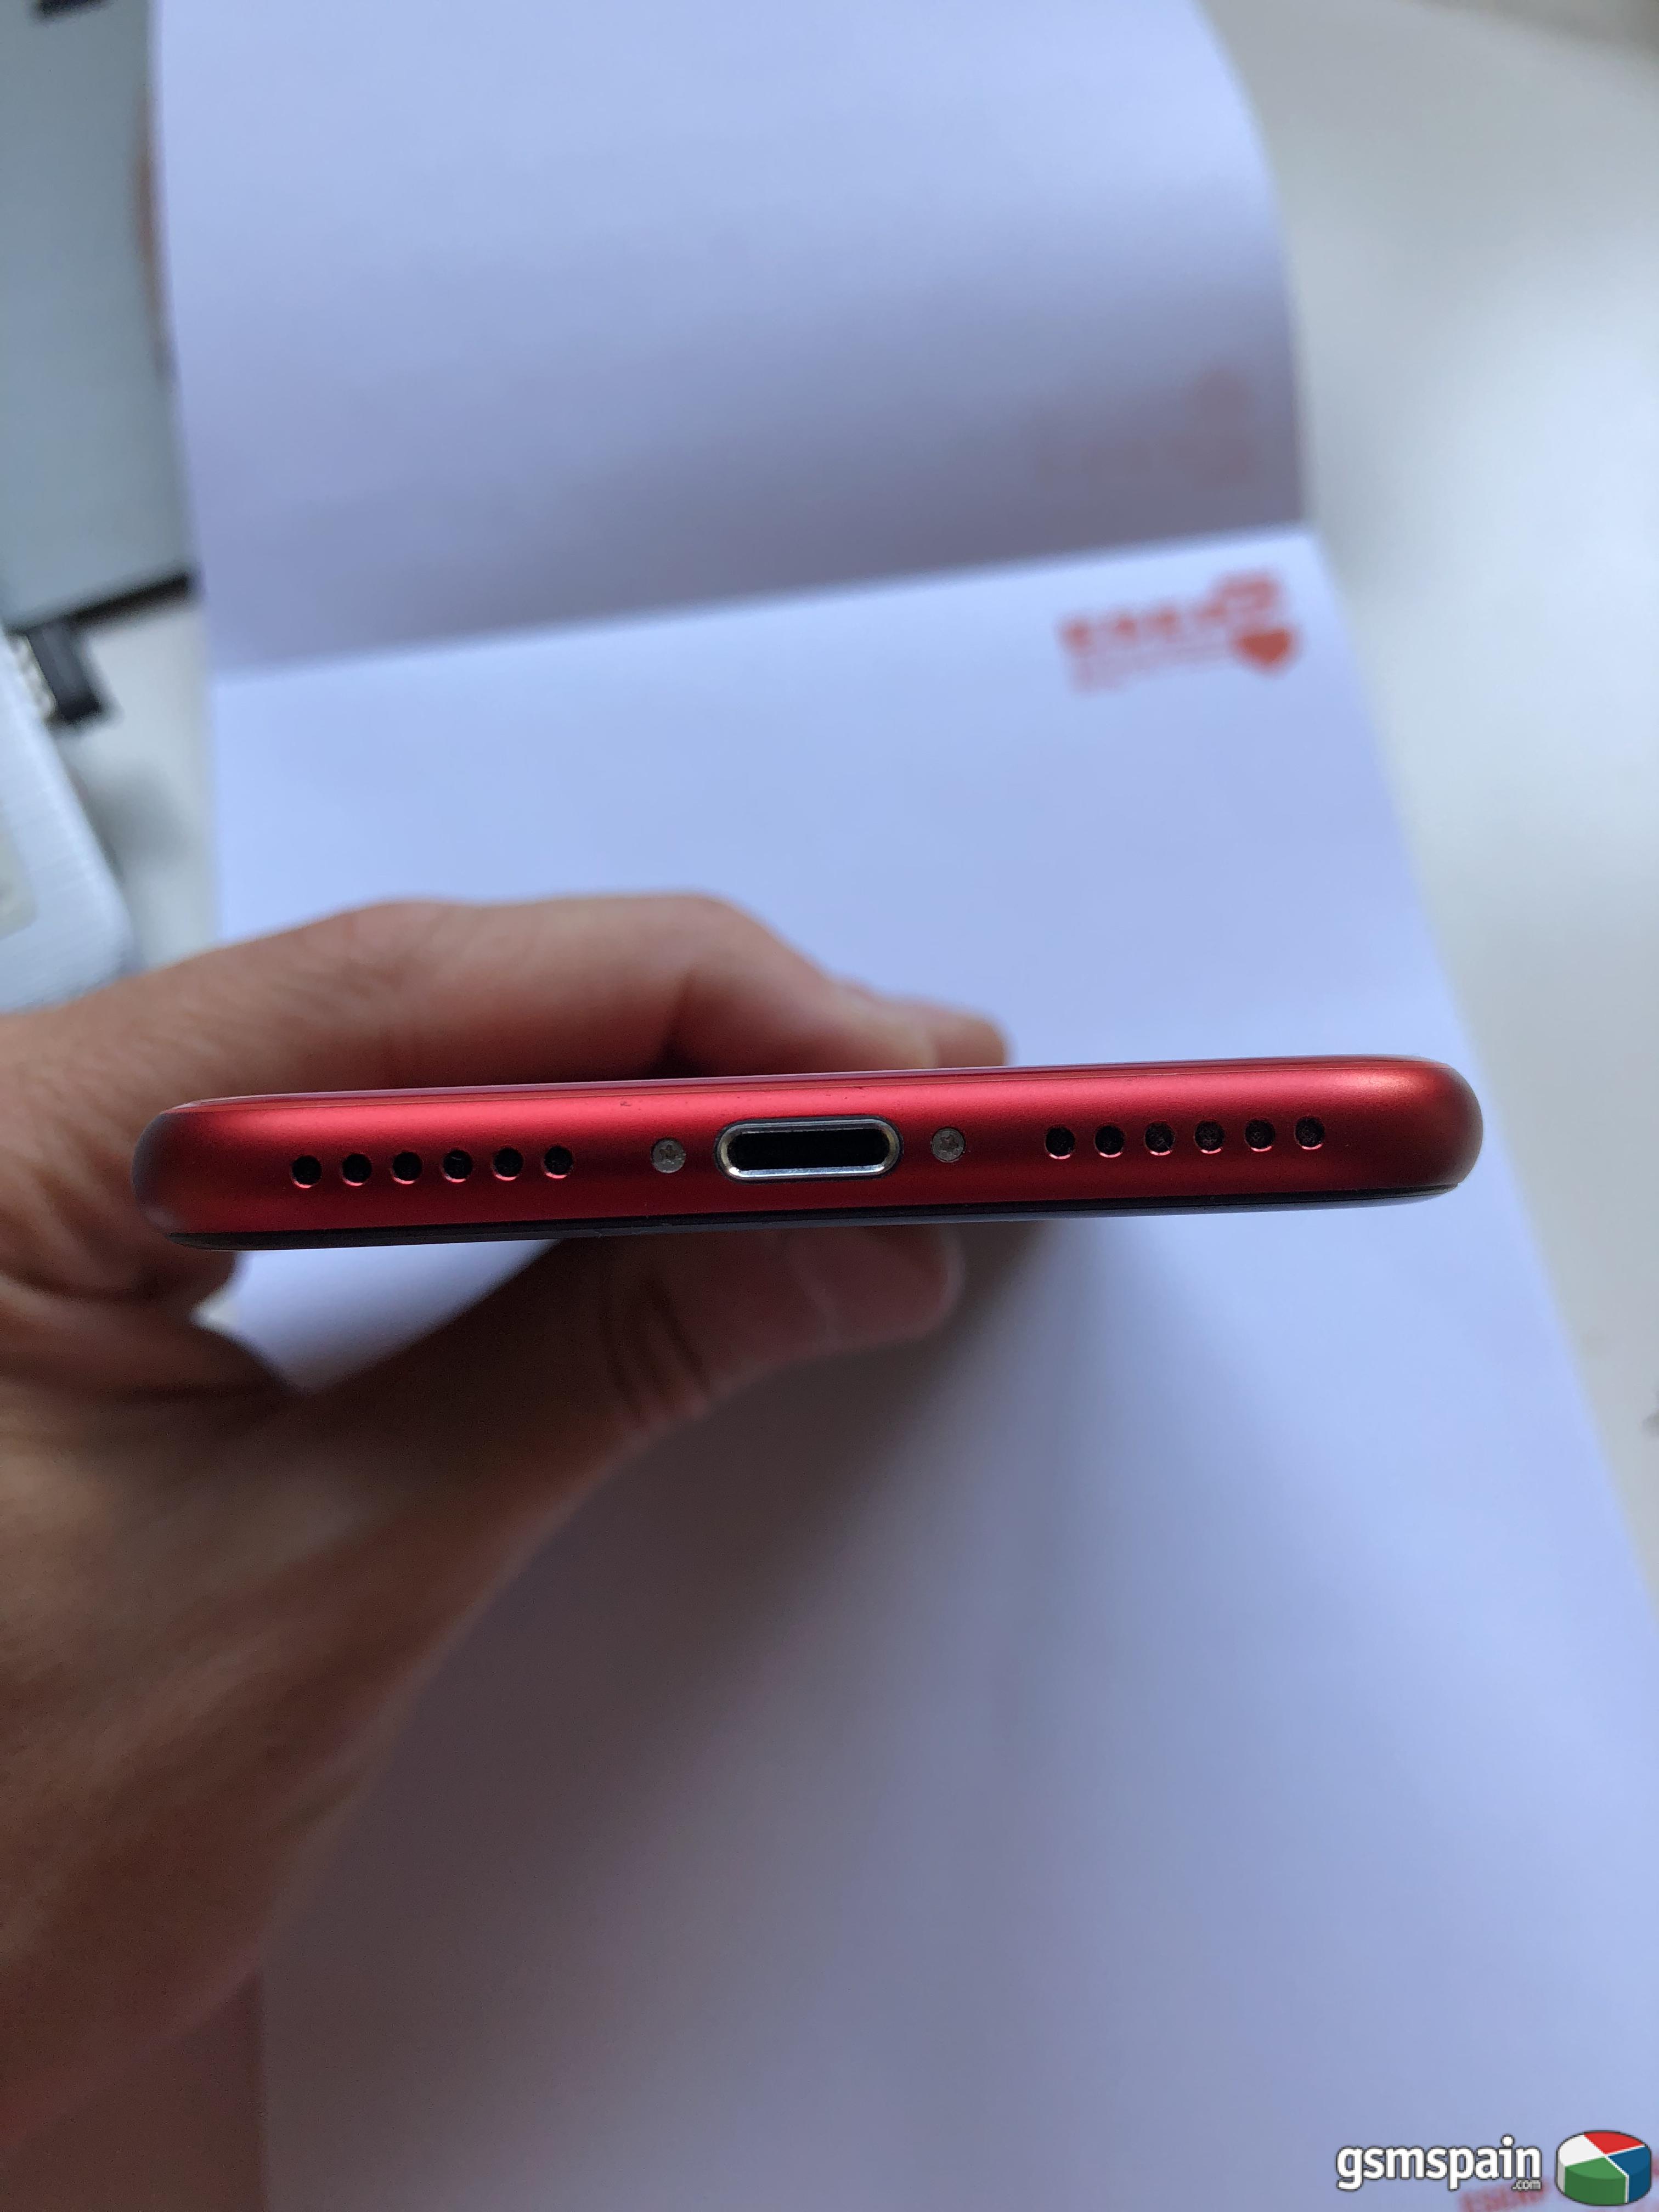 [VENDO] Iphone 8 64gb red product (rojo)